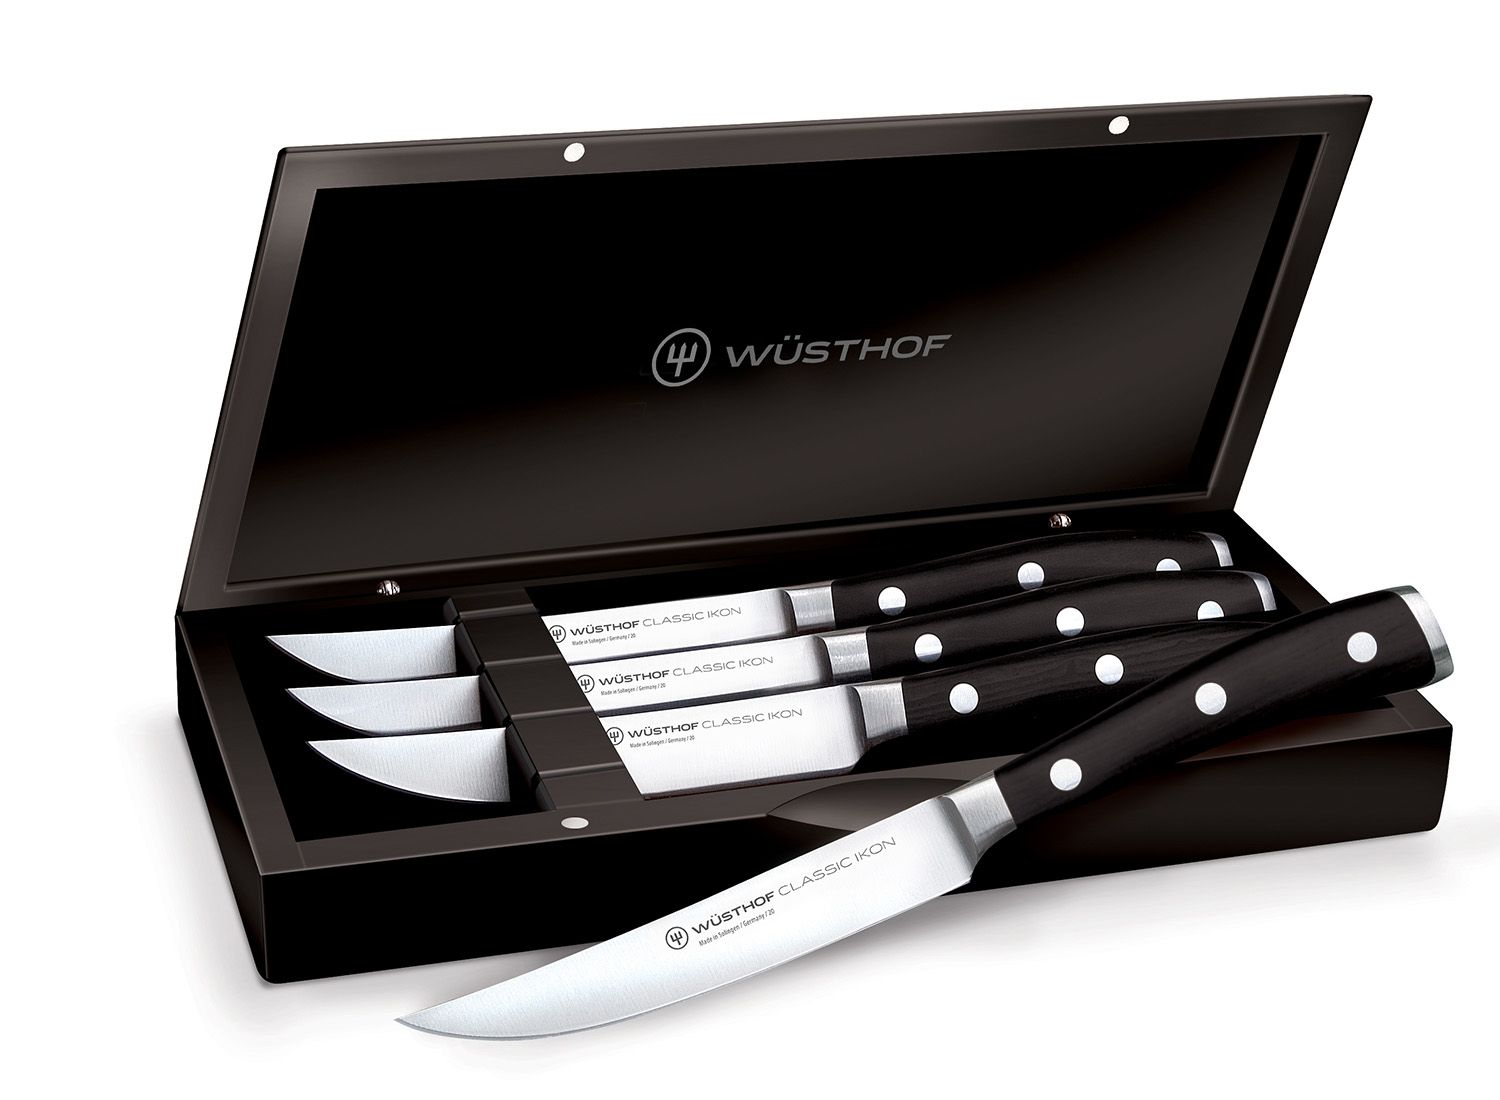 4-Pc. Steak Knife Set In Gift Box